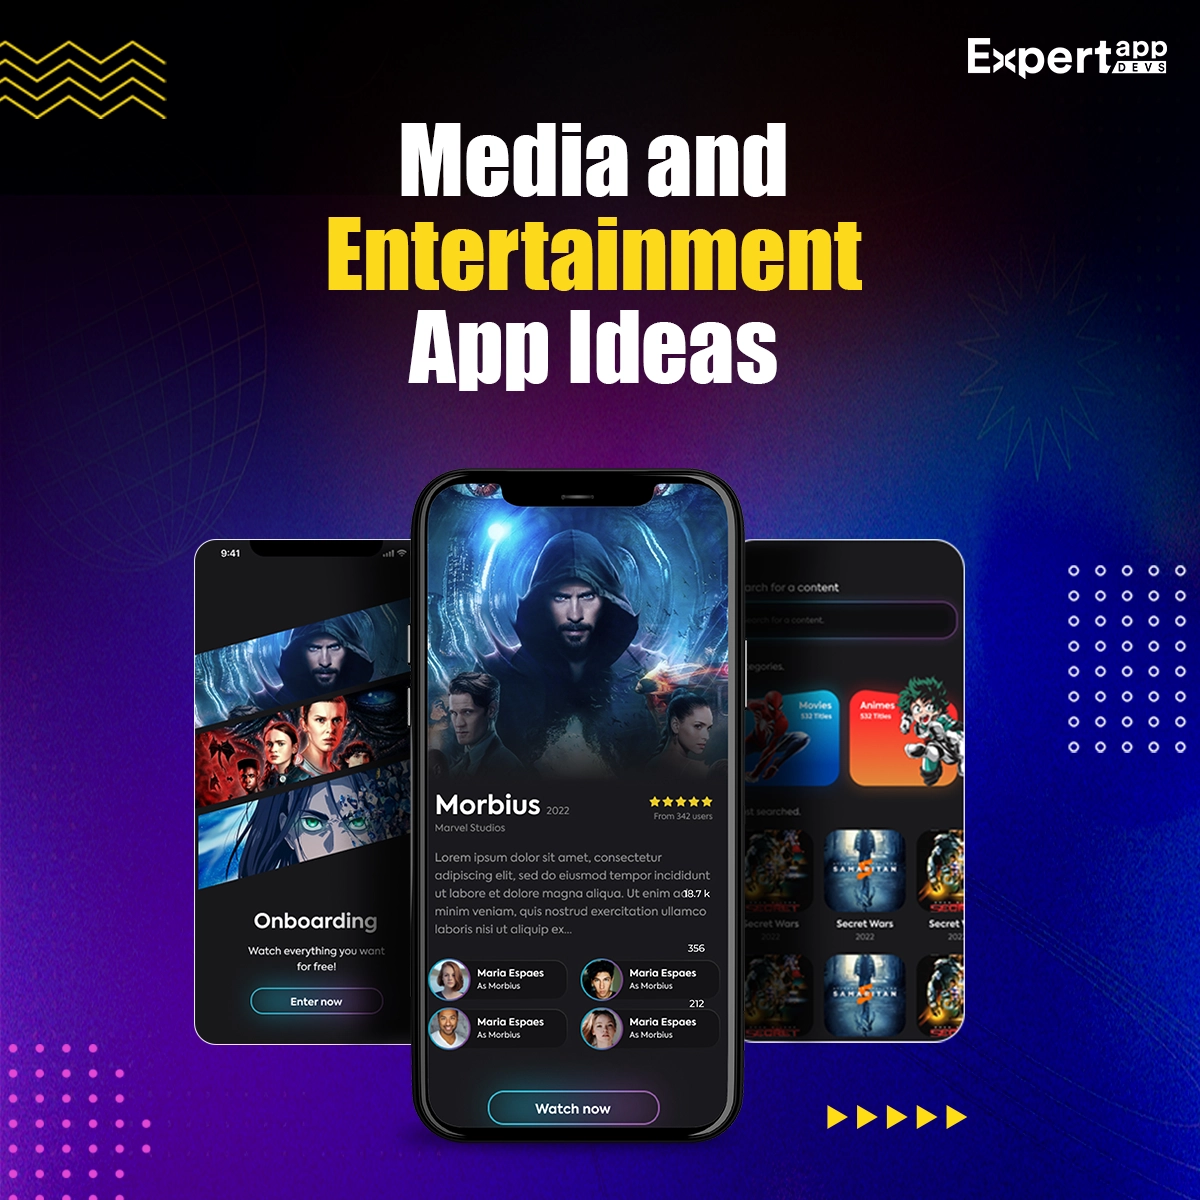 Top 10 Media and Entertainment App Ideas